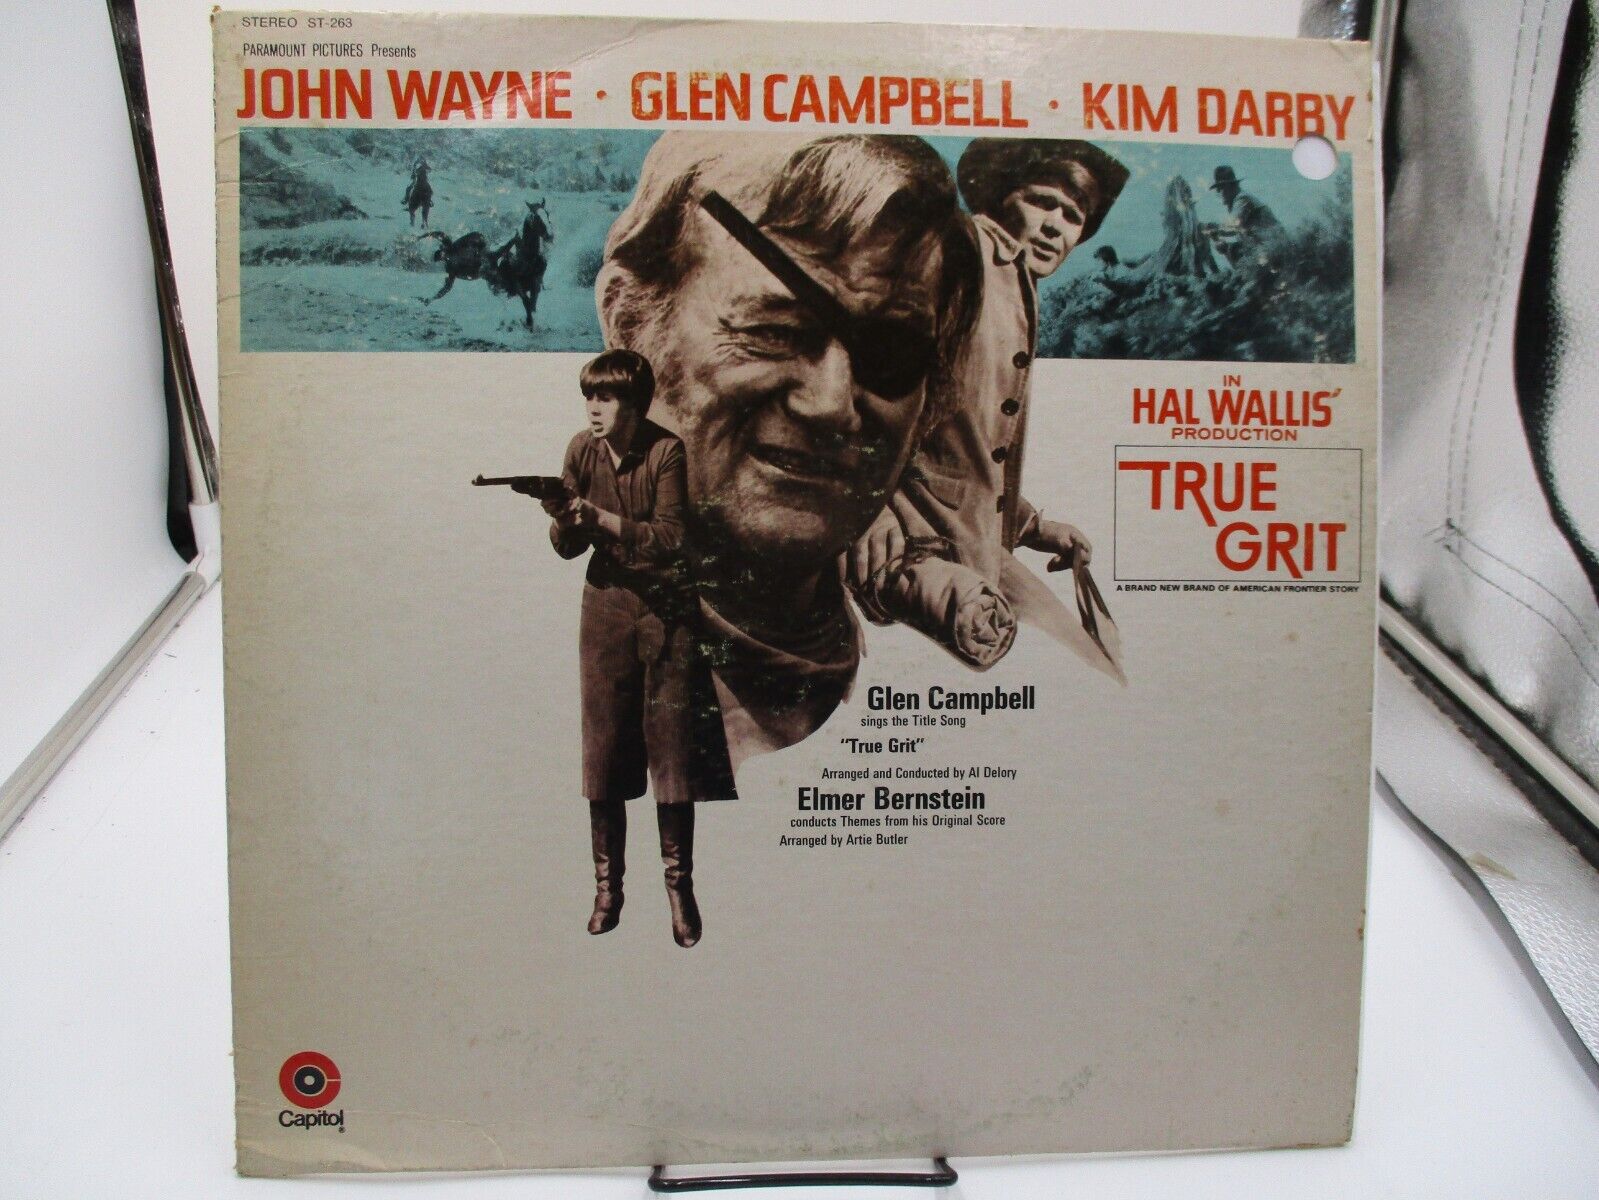 True Grit Soundtrack Wayne, Campbell LP Record Ultrasonic Clean 1969 Capitol VG+